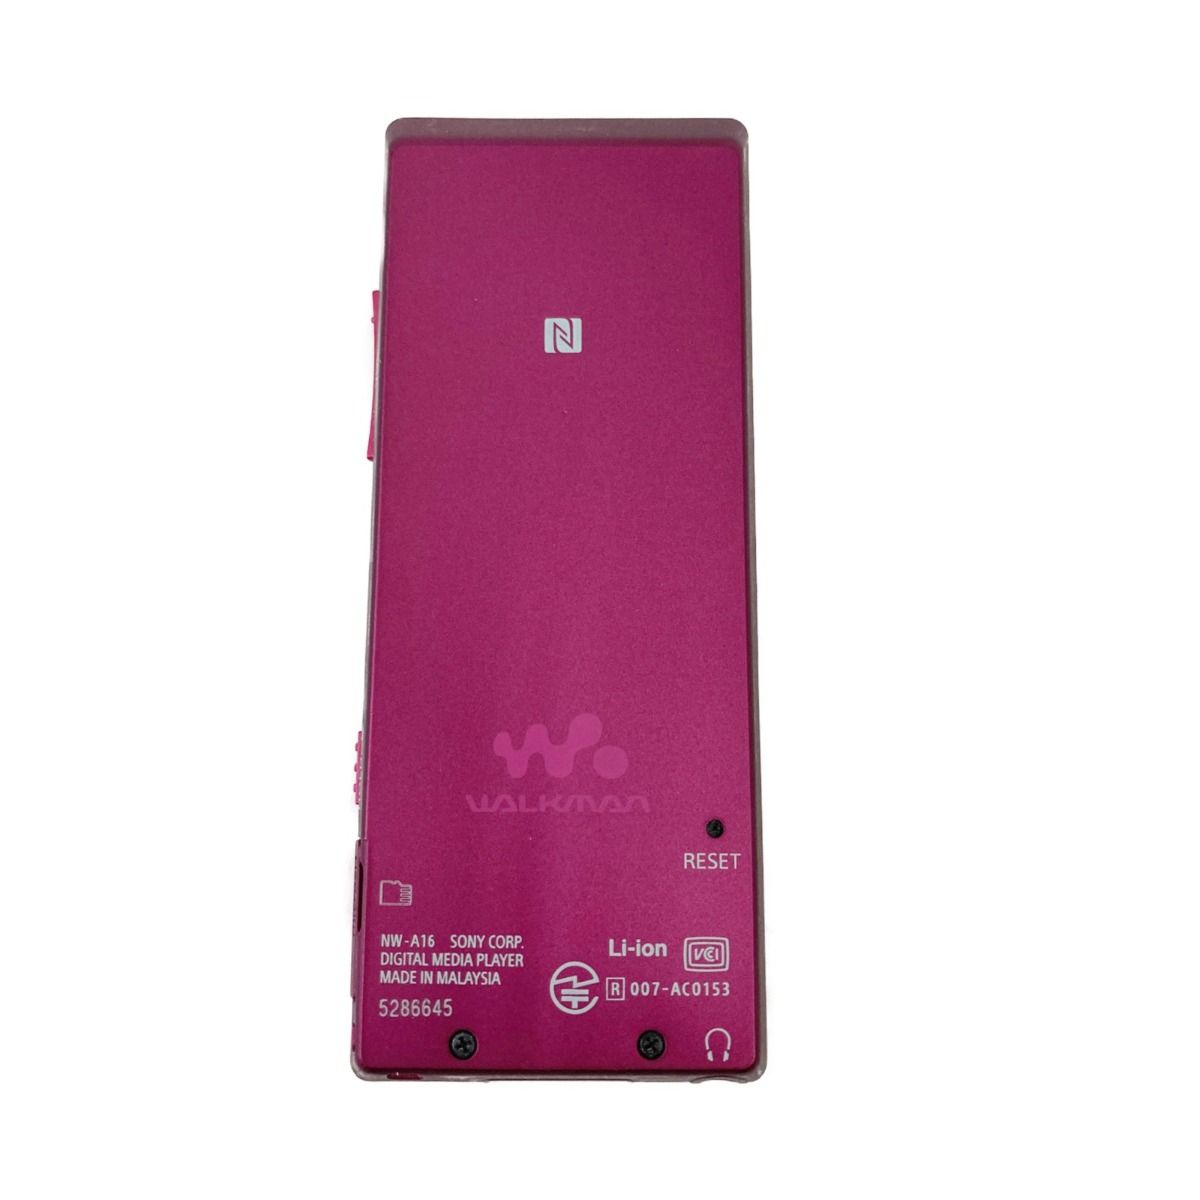 〇〇SONY ソニー Walkman ウォークマン Aシリーズ 32GB ポータブル